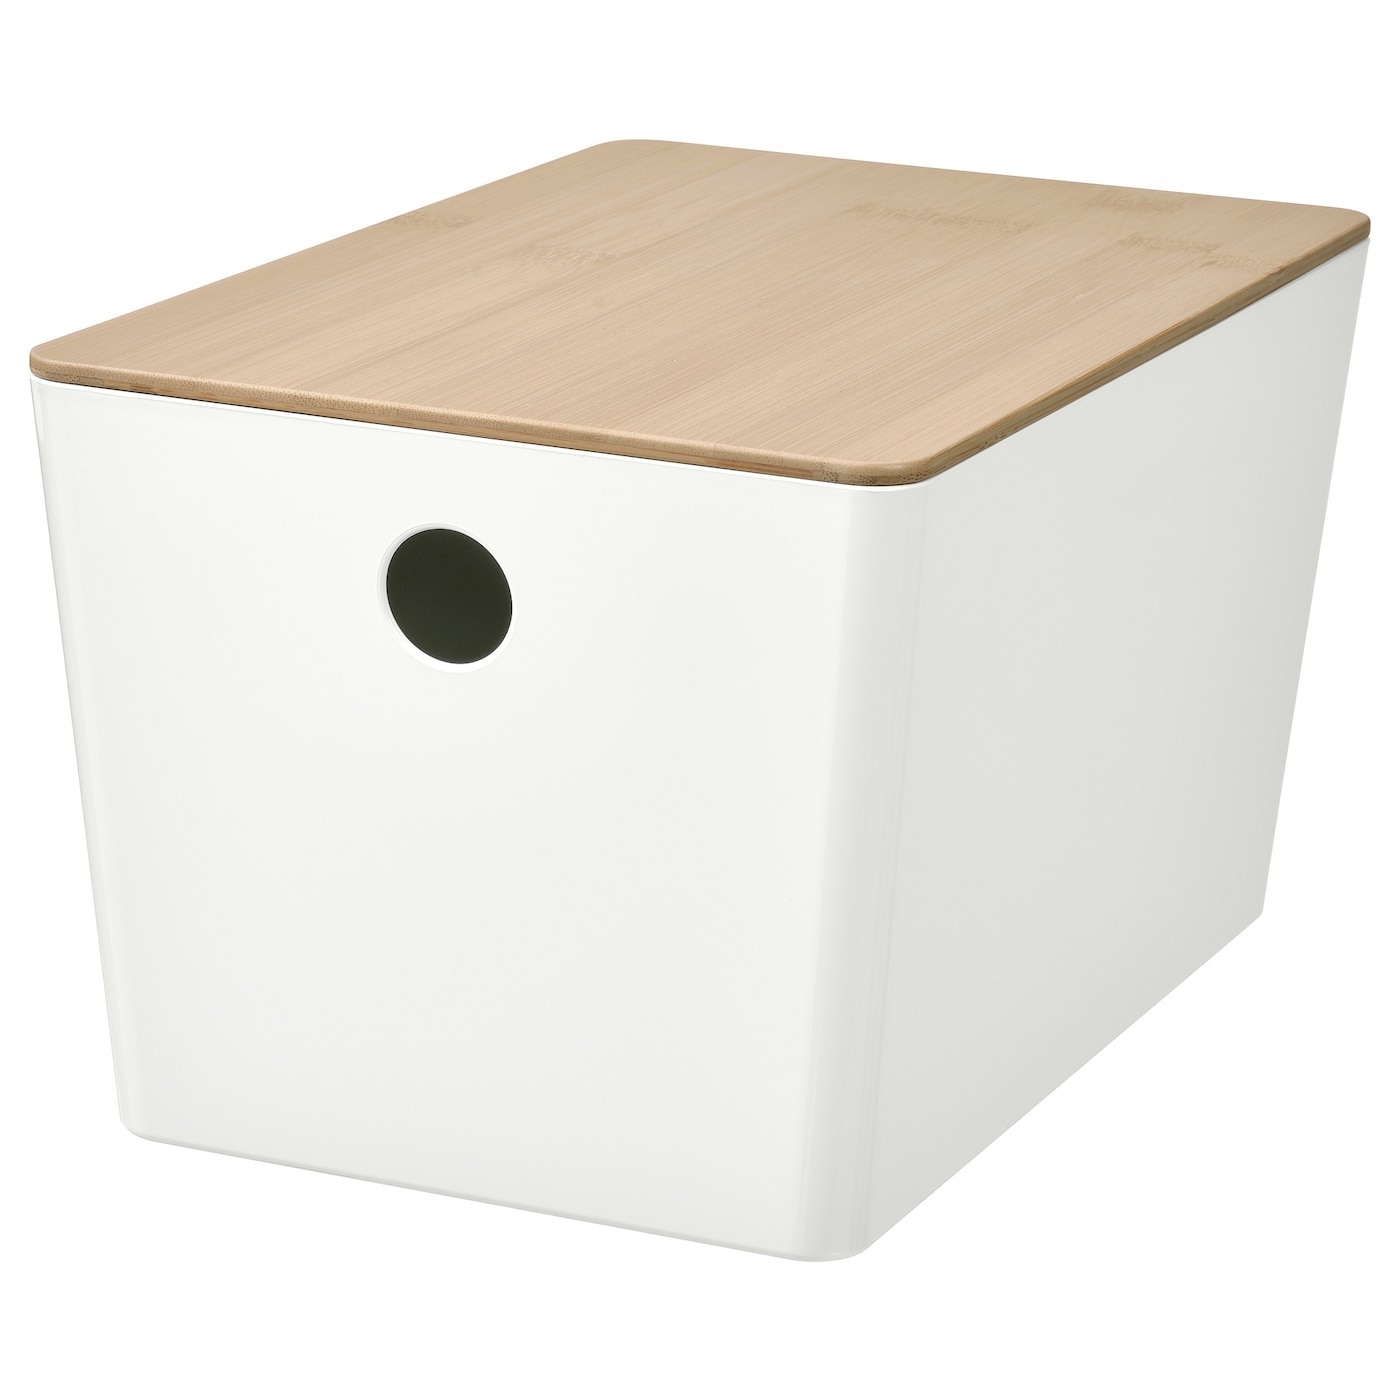 KUGGIS box with lid white/bamboo - IKEA